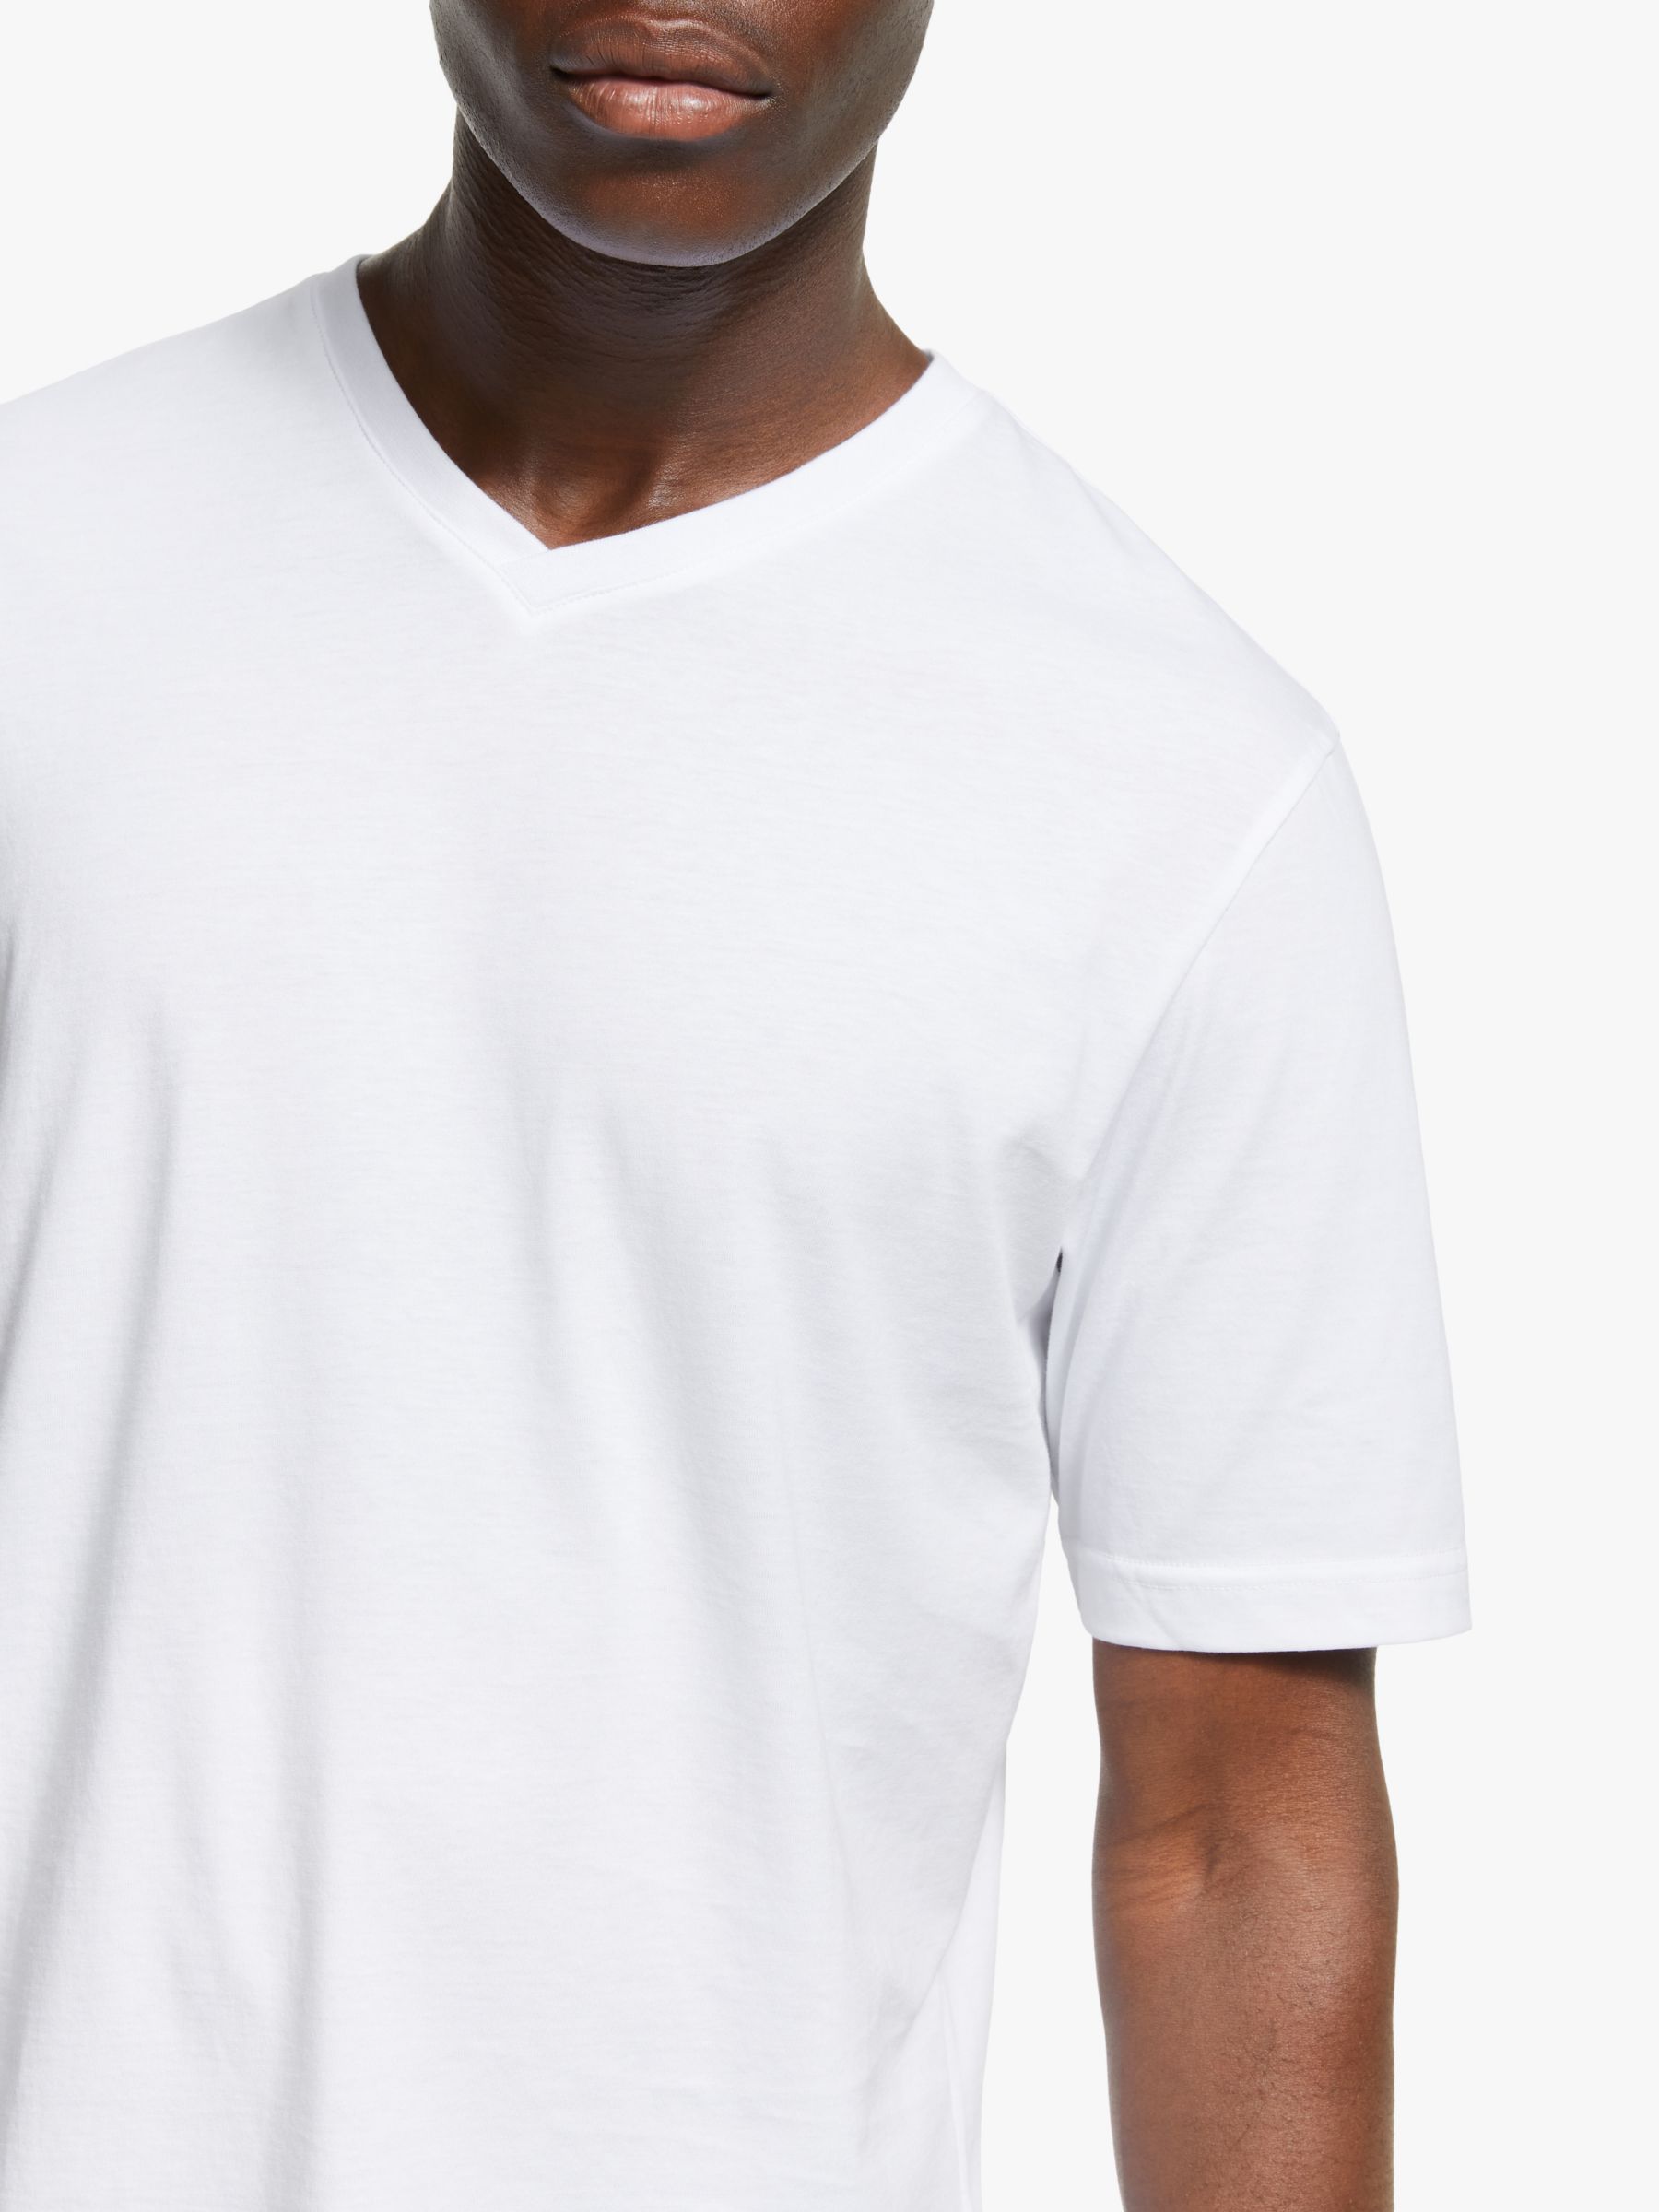 John Lewis V-Neck Organic Cotton Lounge T-Shirt, White, S